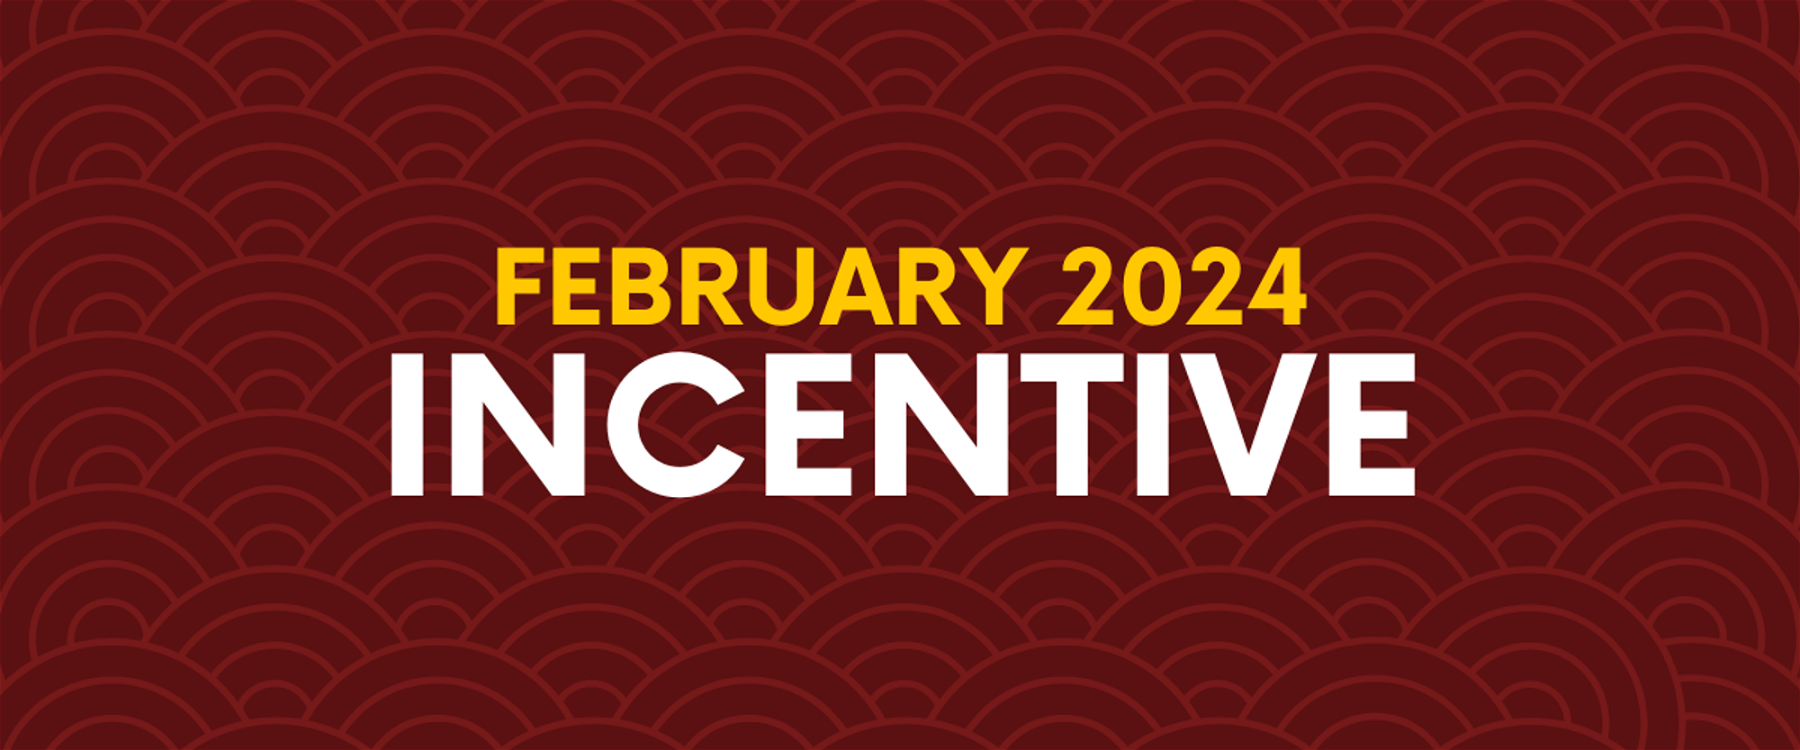 February 2024 Incentive